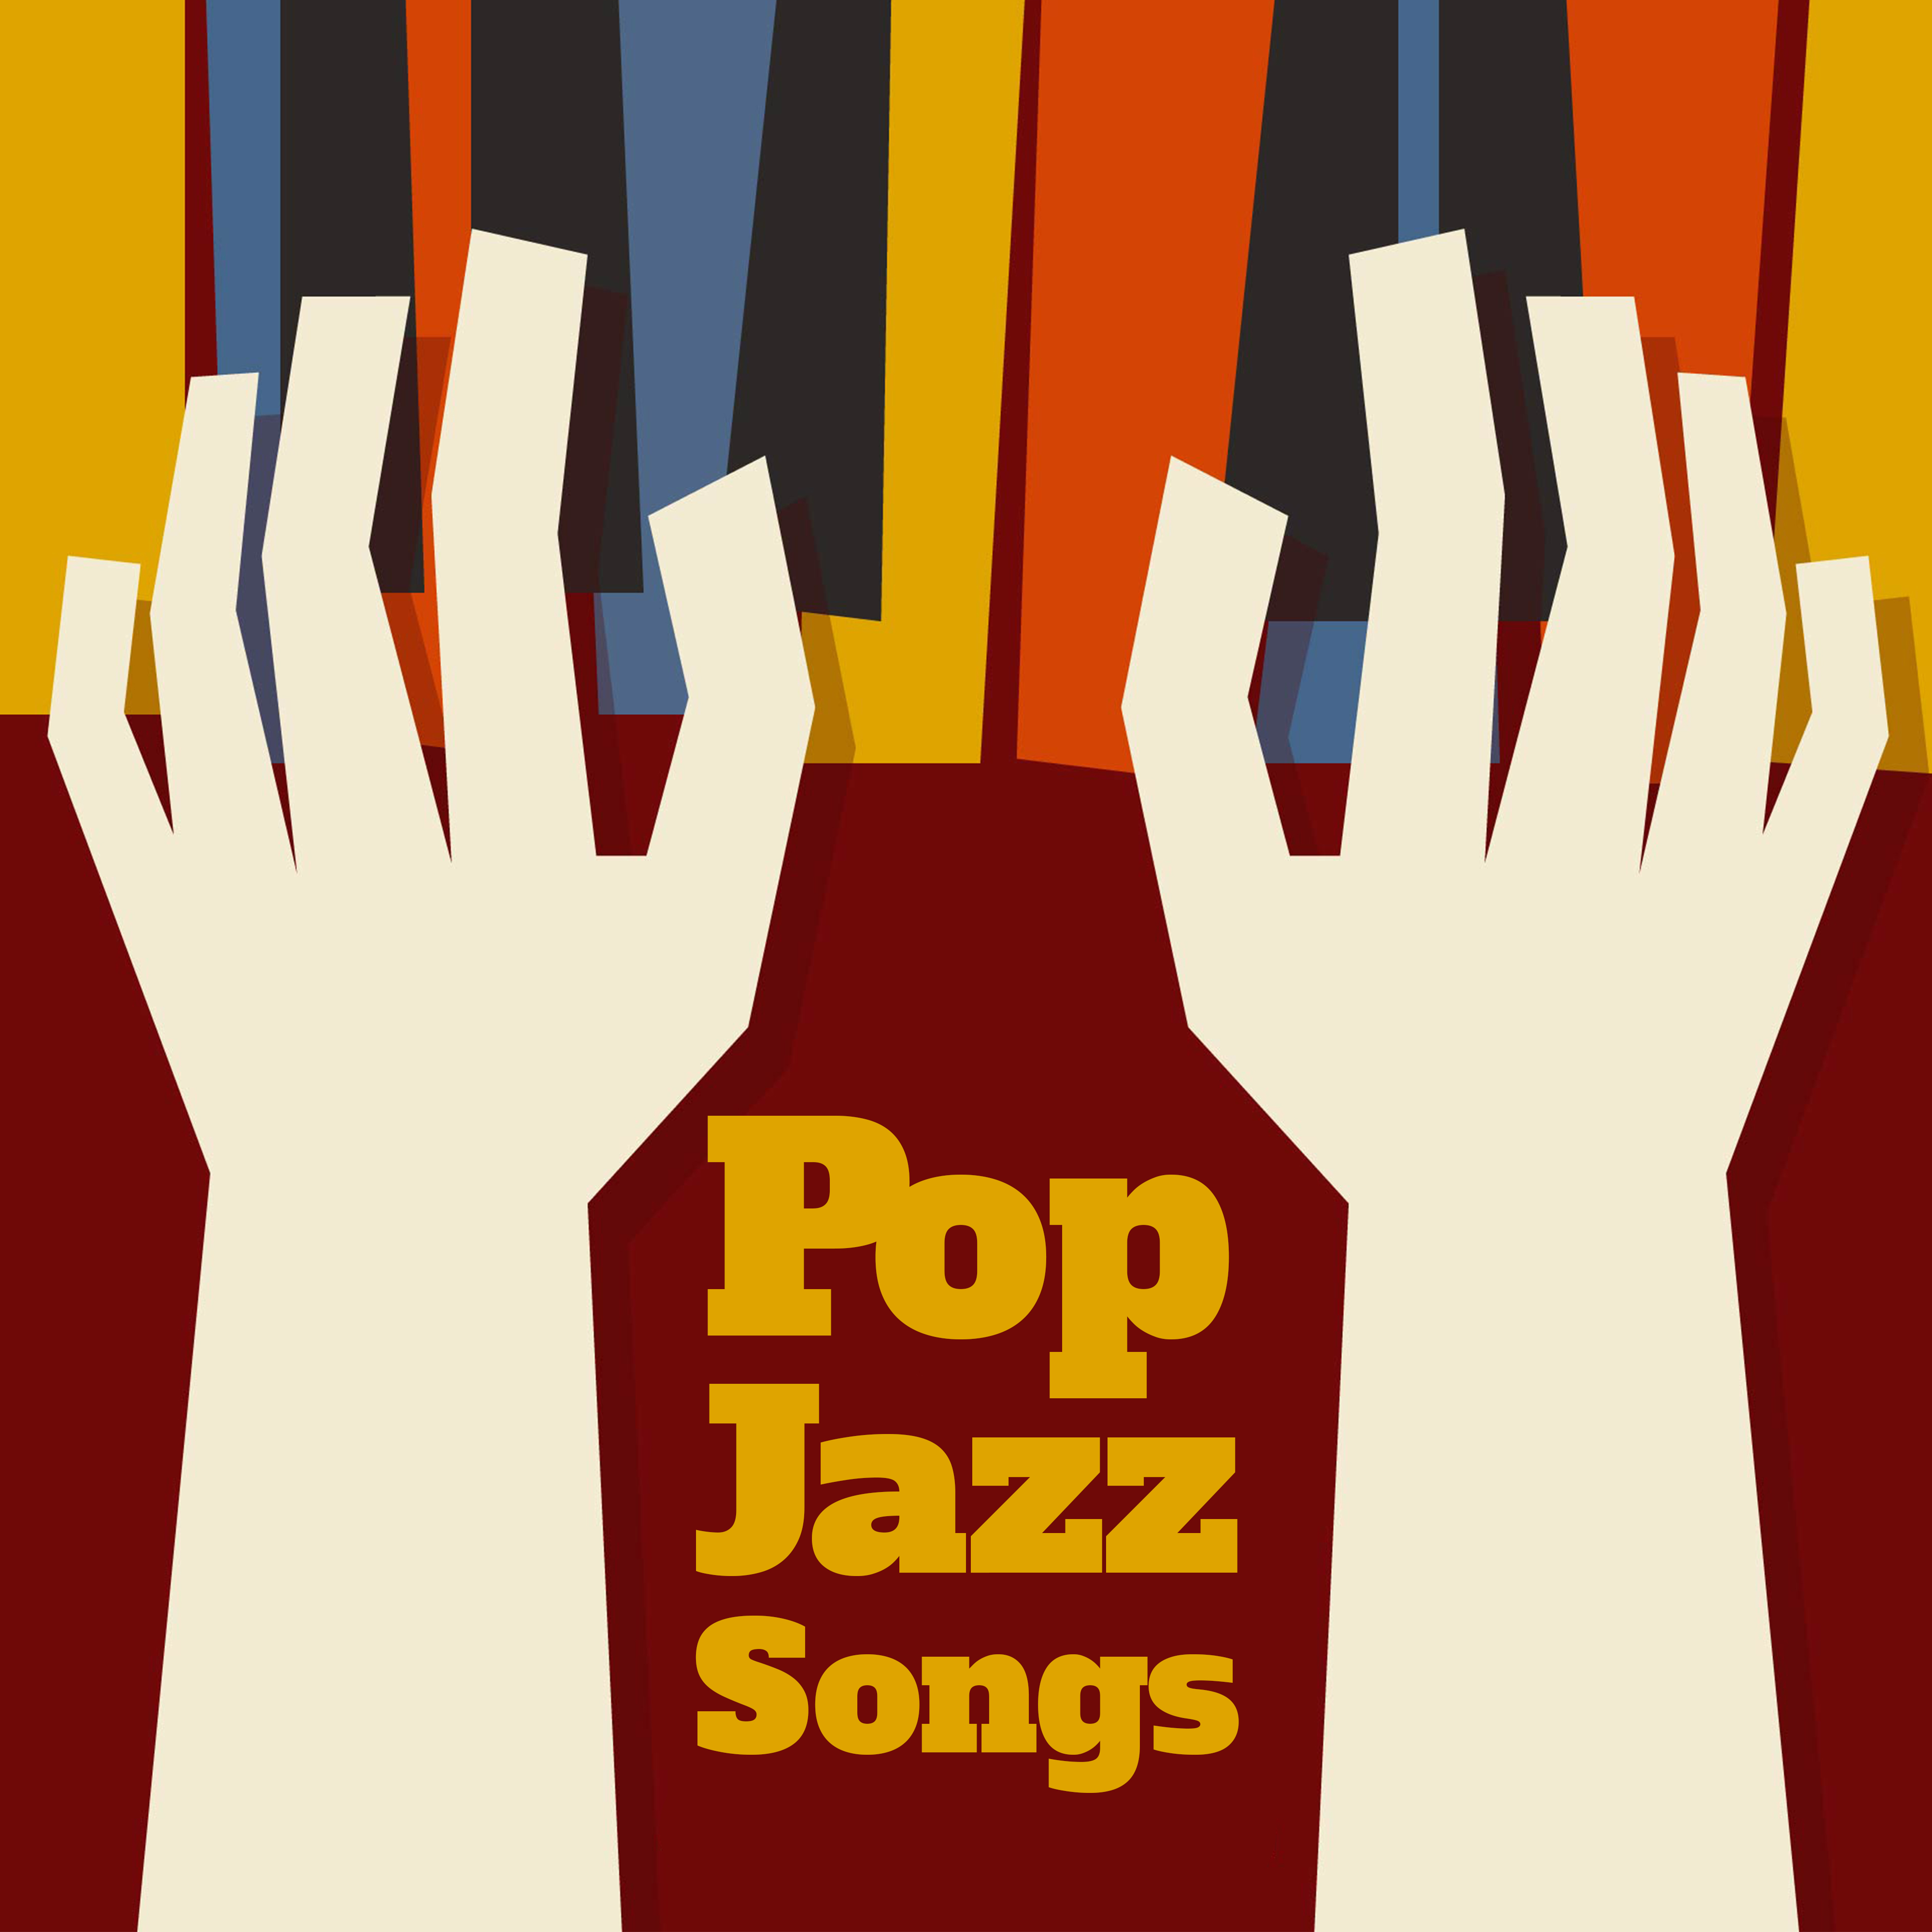 Pop Jazz Songs